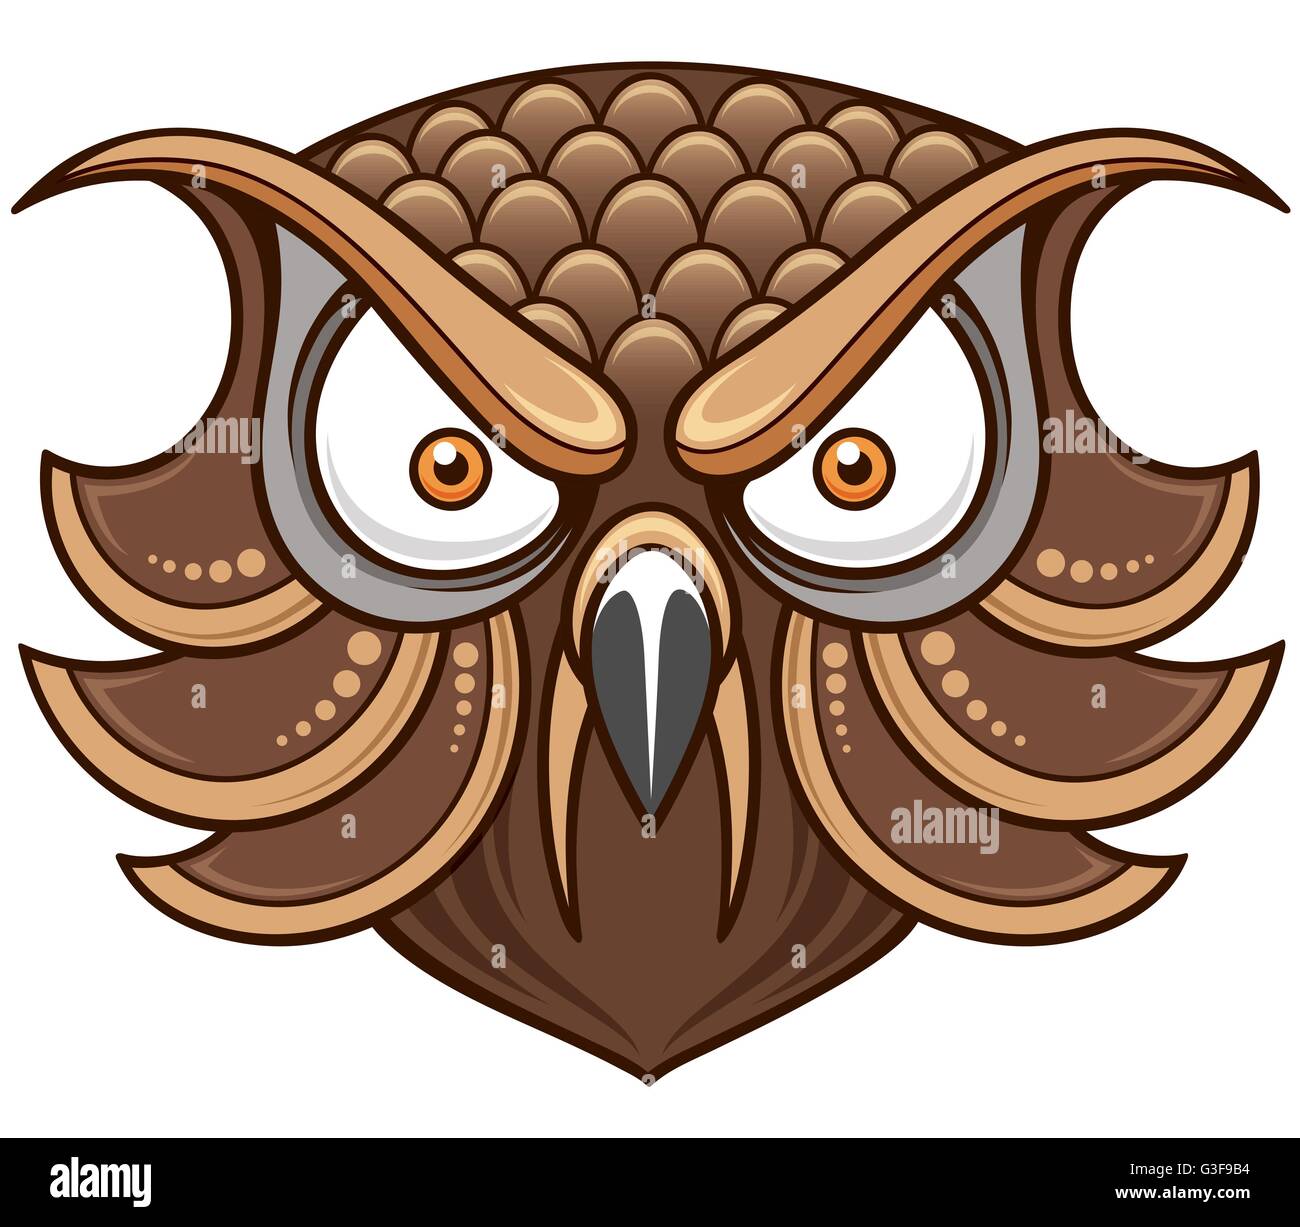 Illustration Vecteur de Cartoon Owl Head Illustration de Vecteur